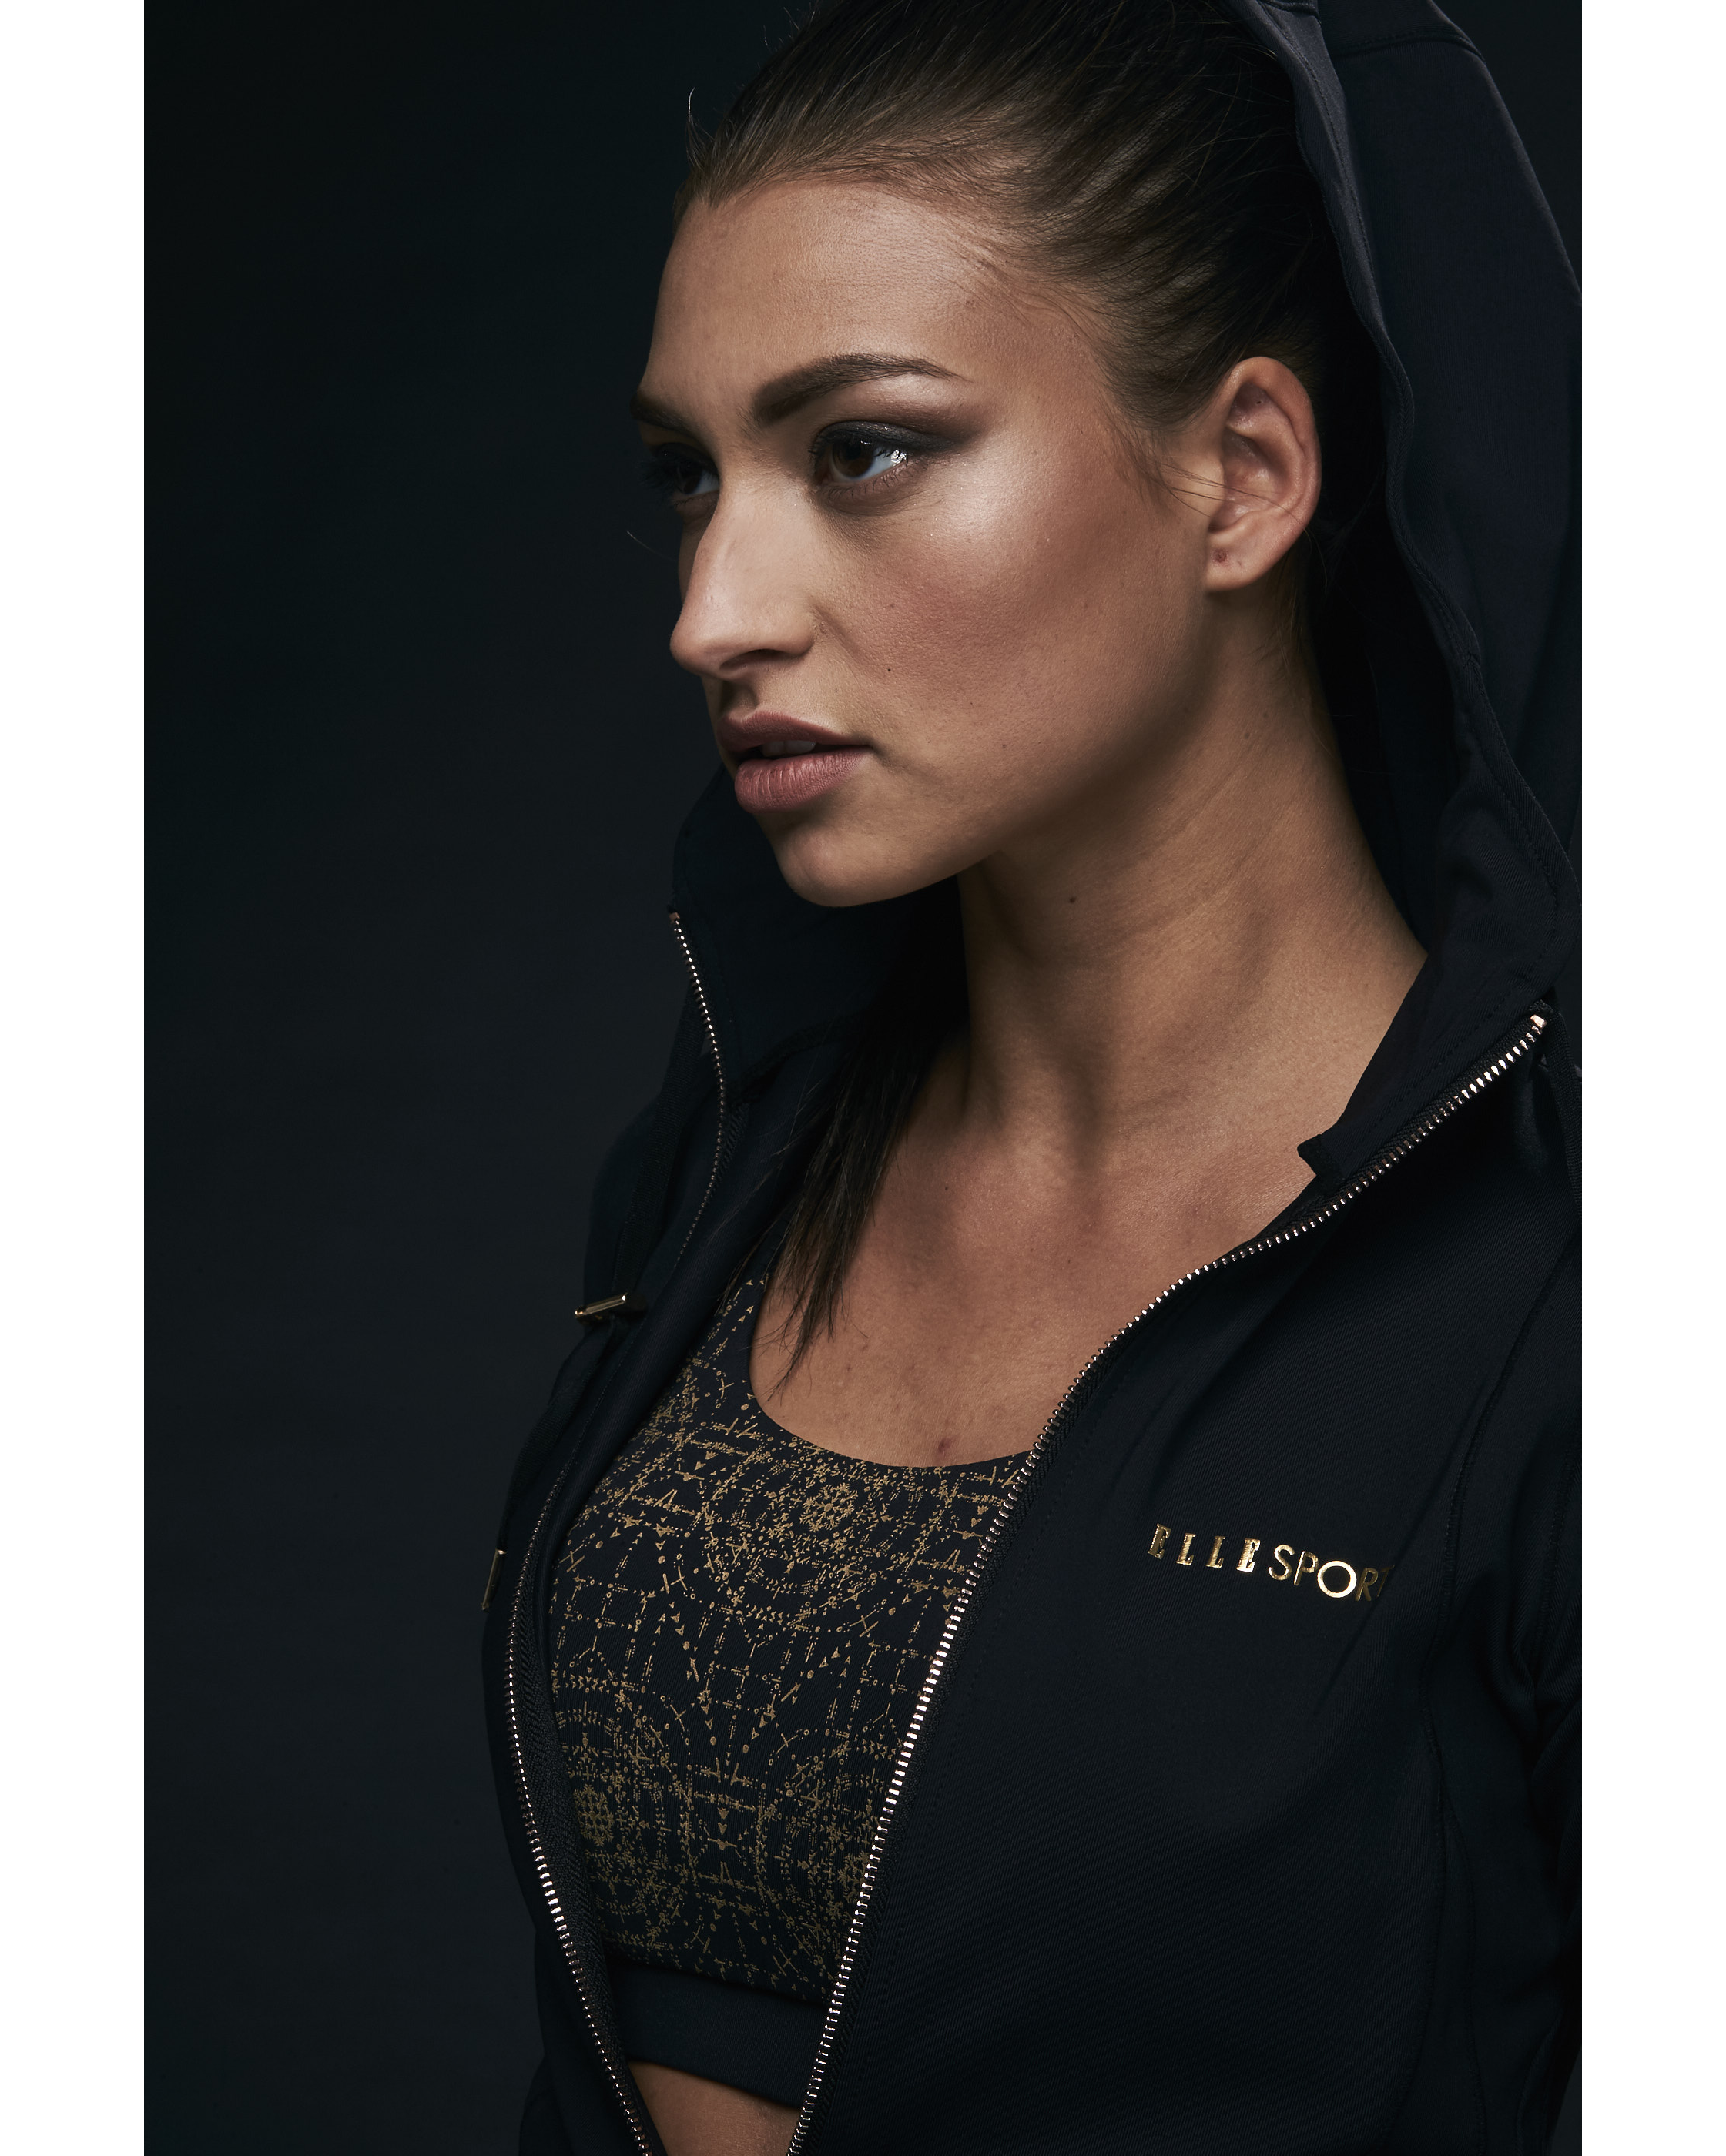 Ellesport Sleek Energising Sports Jacket with Hood – Black/Gold